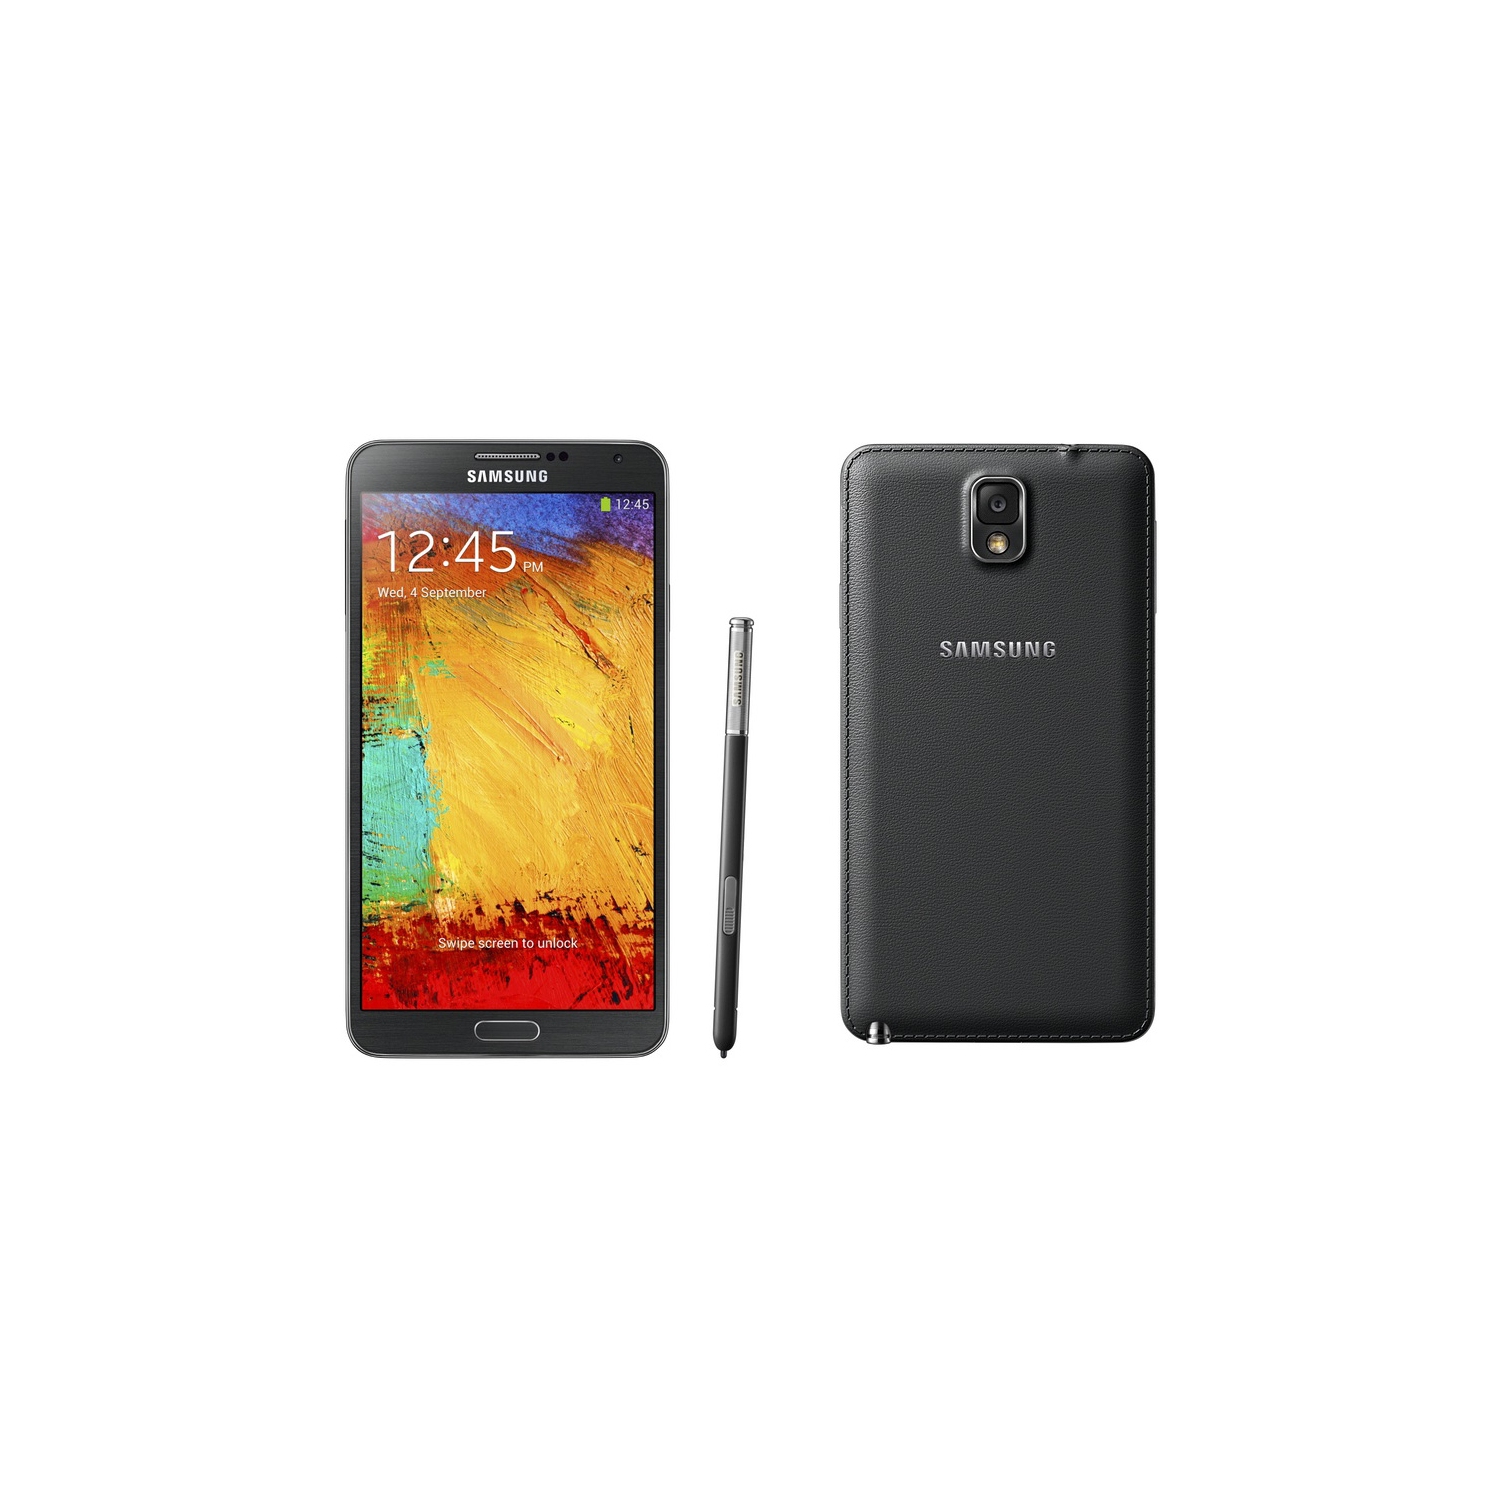 Refurbished (Good) - Samsung Galaxy Note 3 SM-N900W8 Unlocked Smartphone 32gb Black